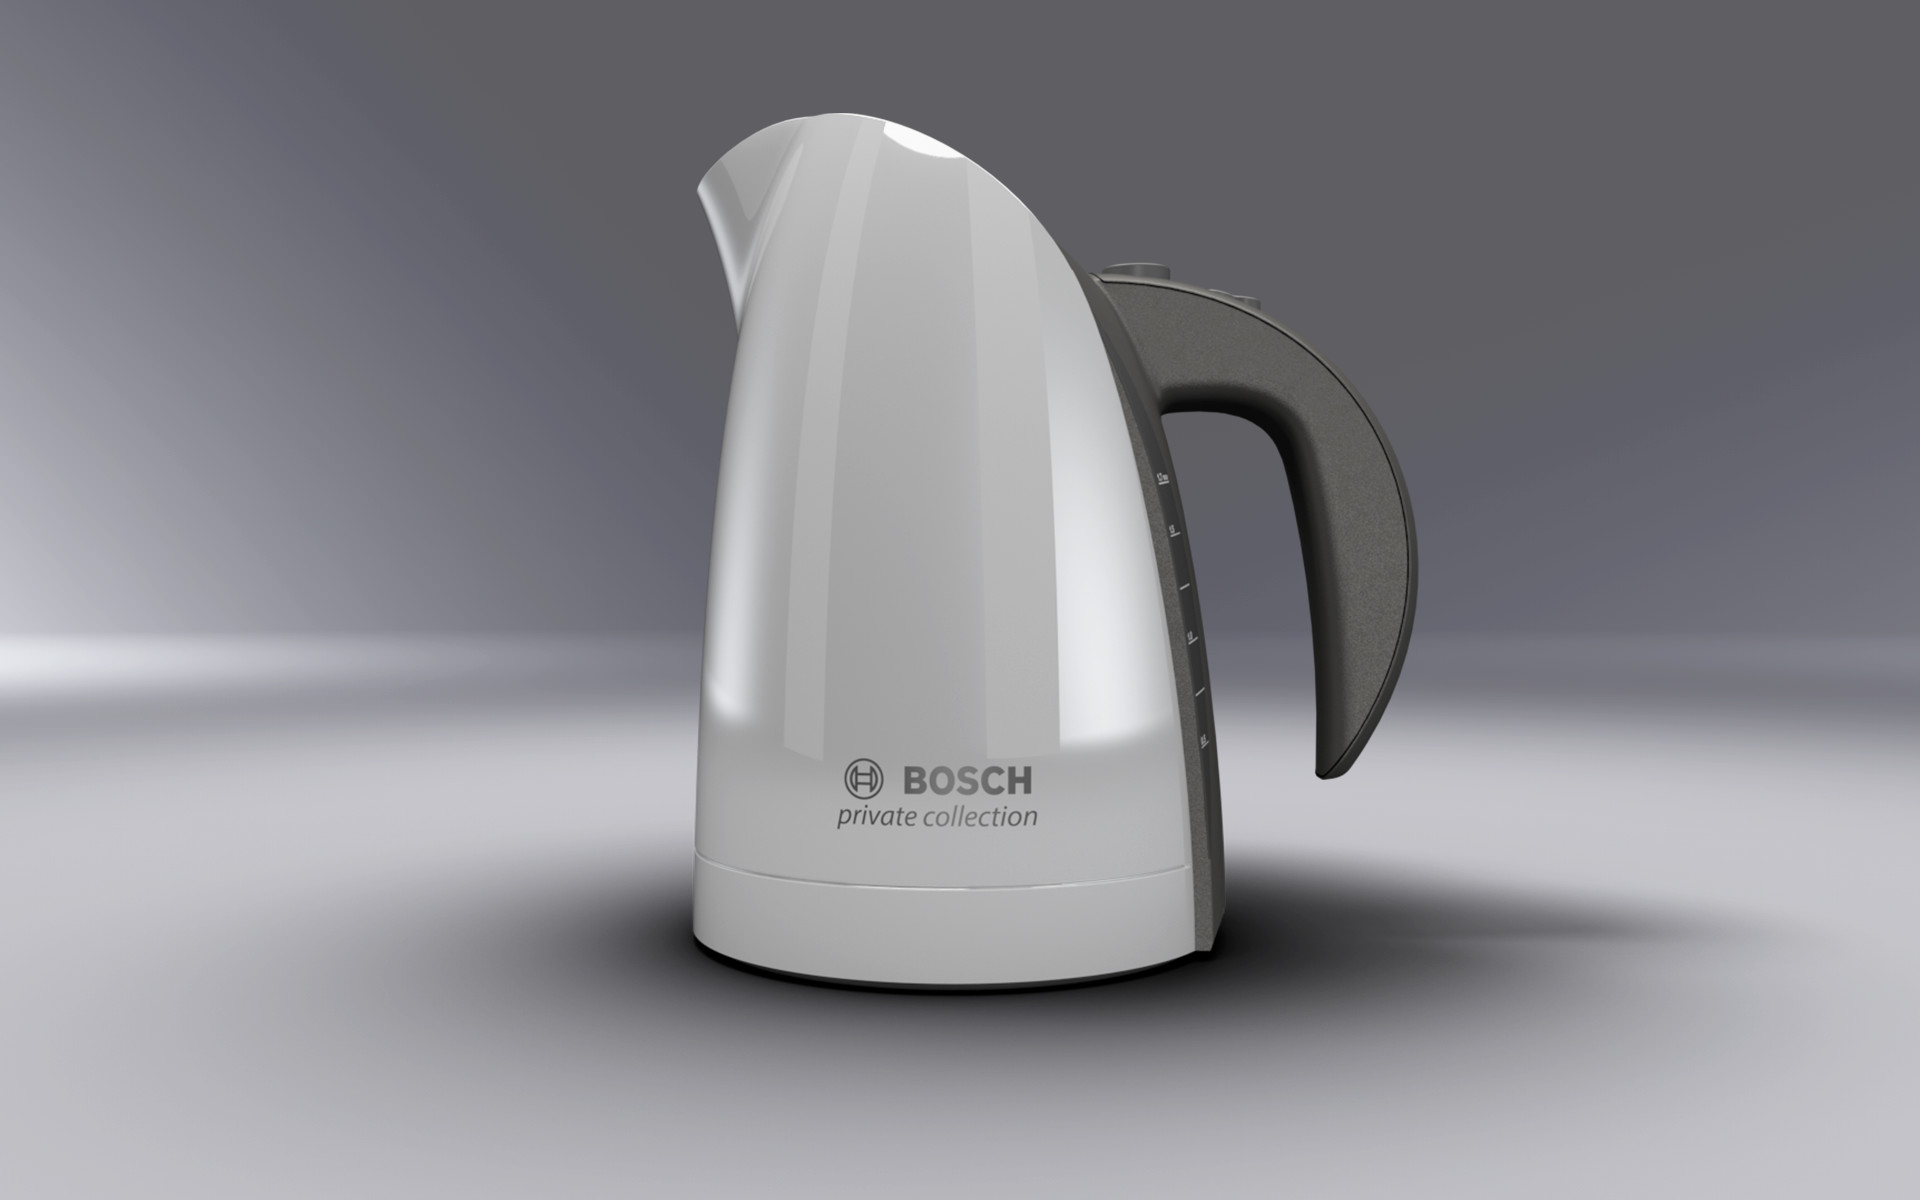 Bosch collection. Чайник бош приват коллекшн. Чайник бош приват коллекшн черный. Чайник Bosch 7090. Проточный чайник Bosch.